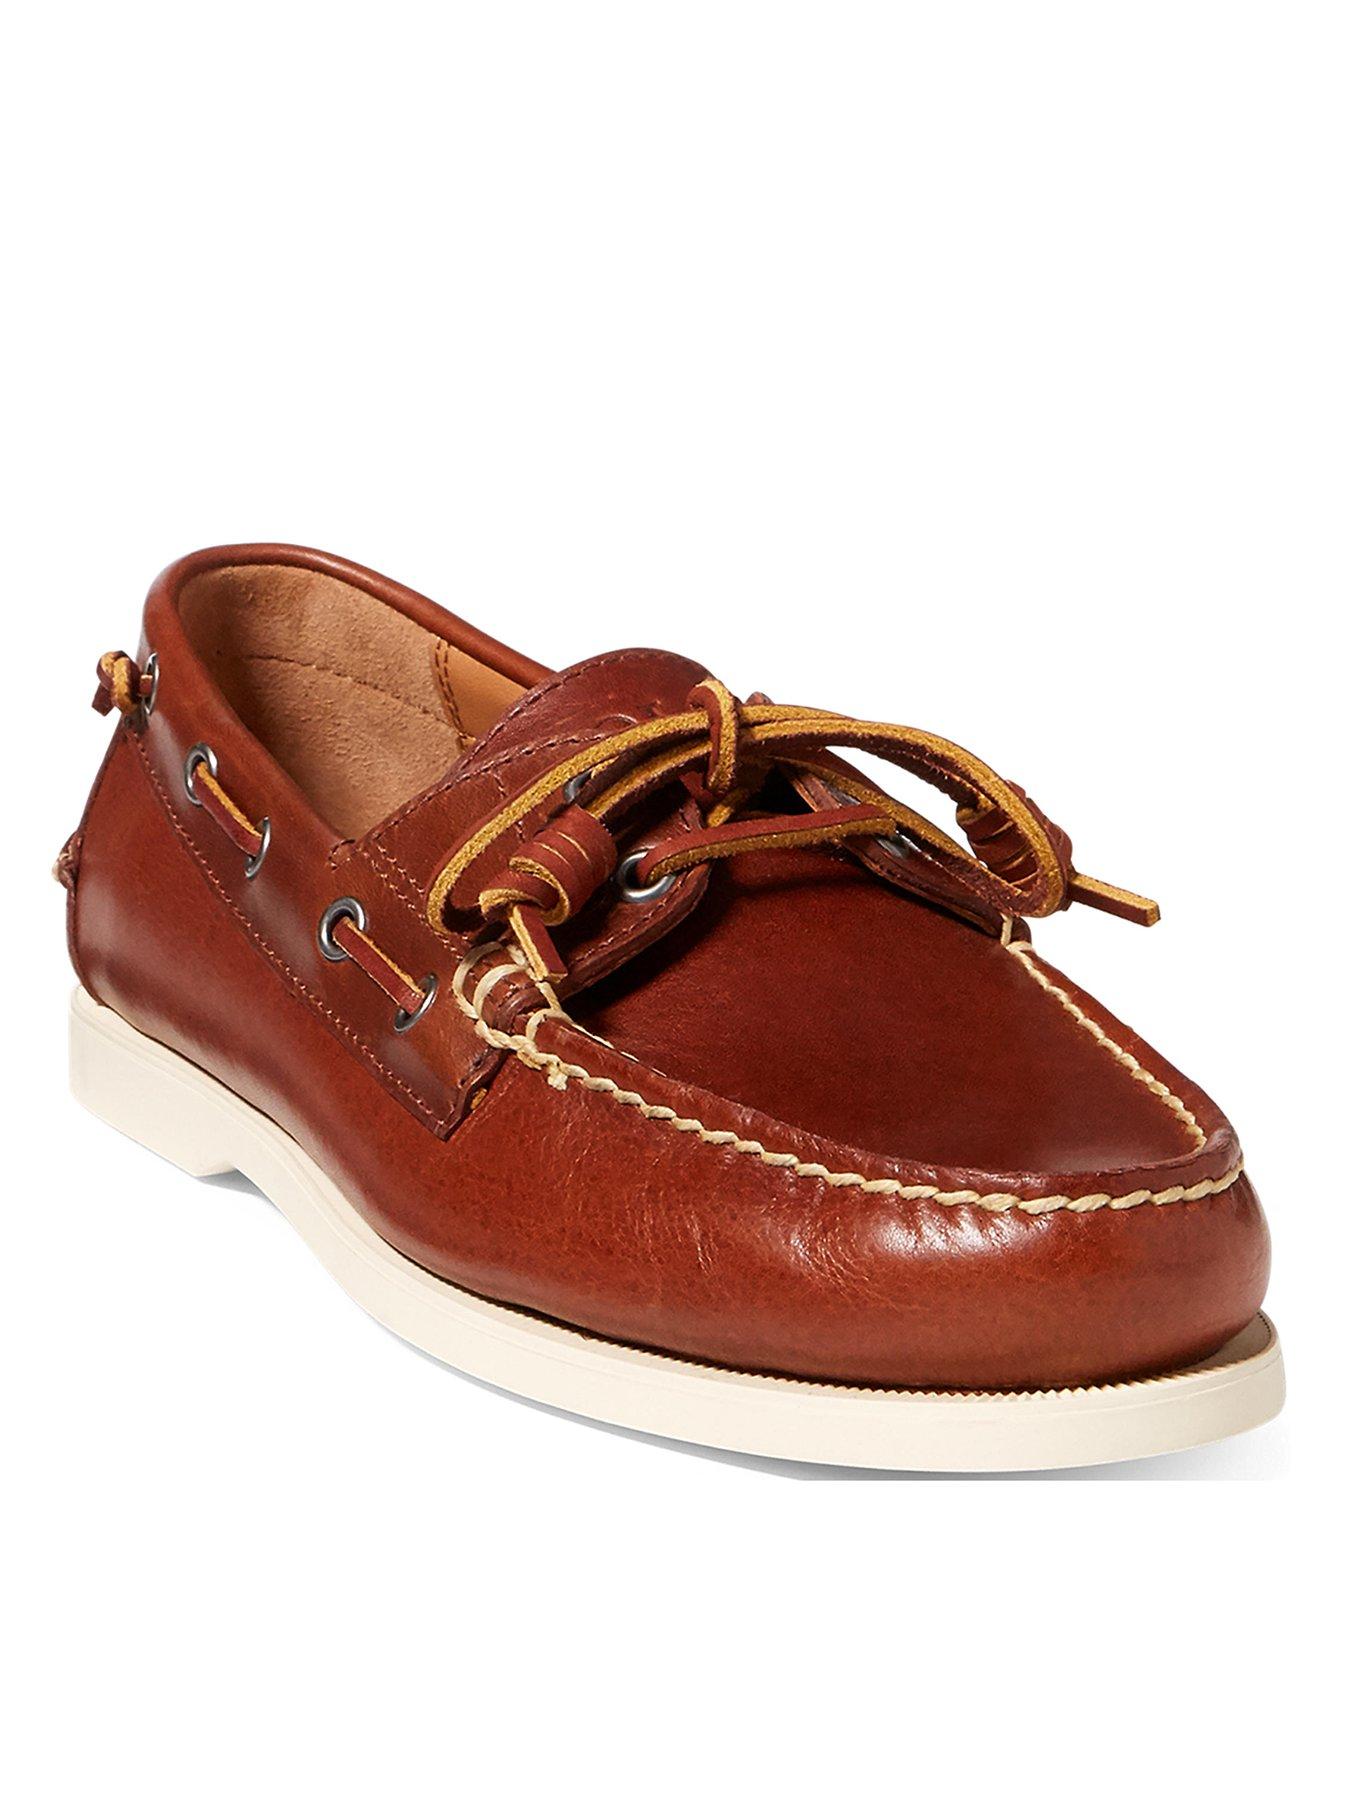 Polo Ralph Lauren Merton Leather Boat Shoes 